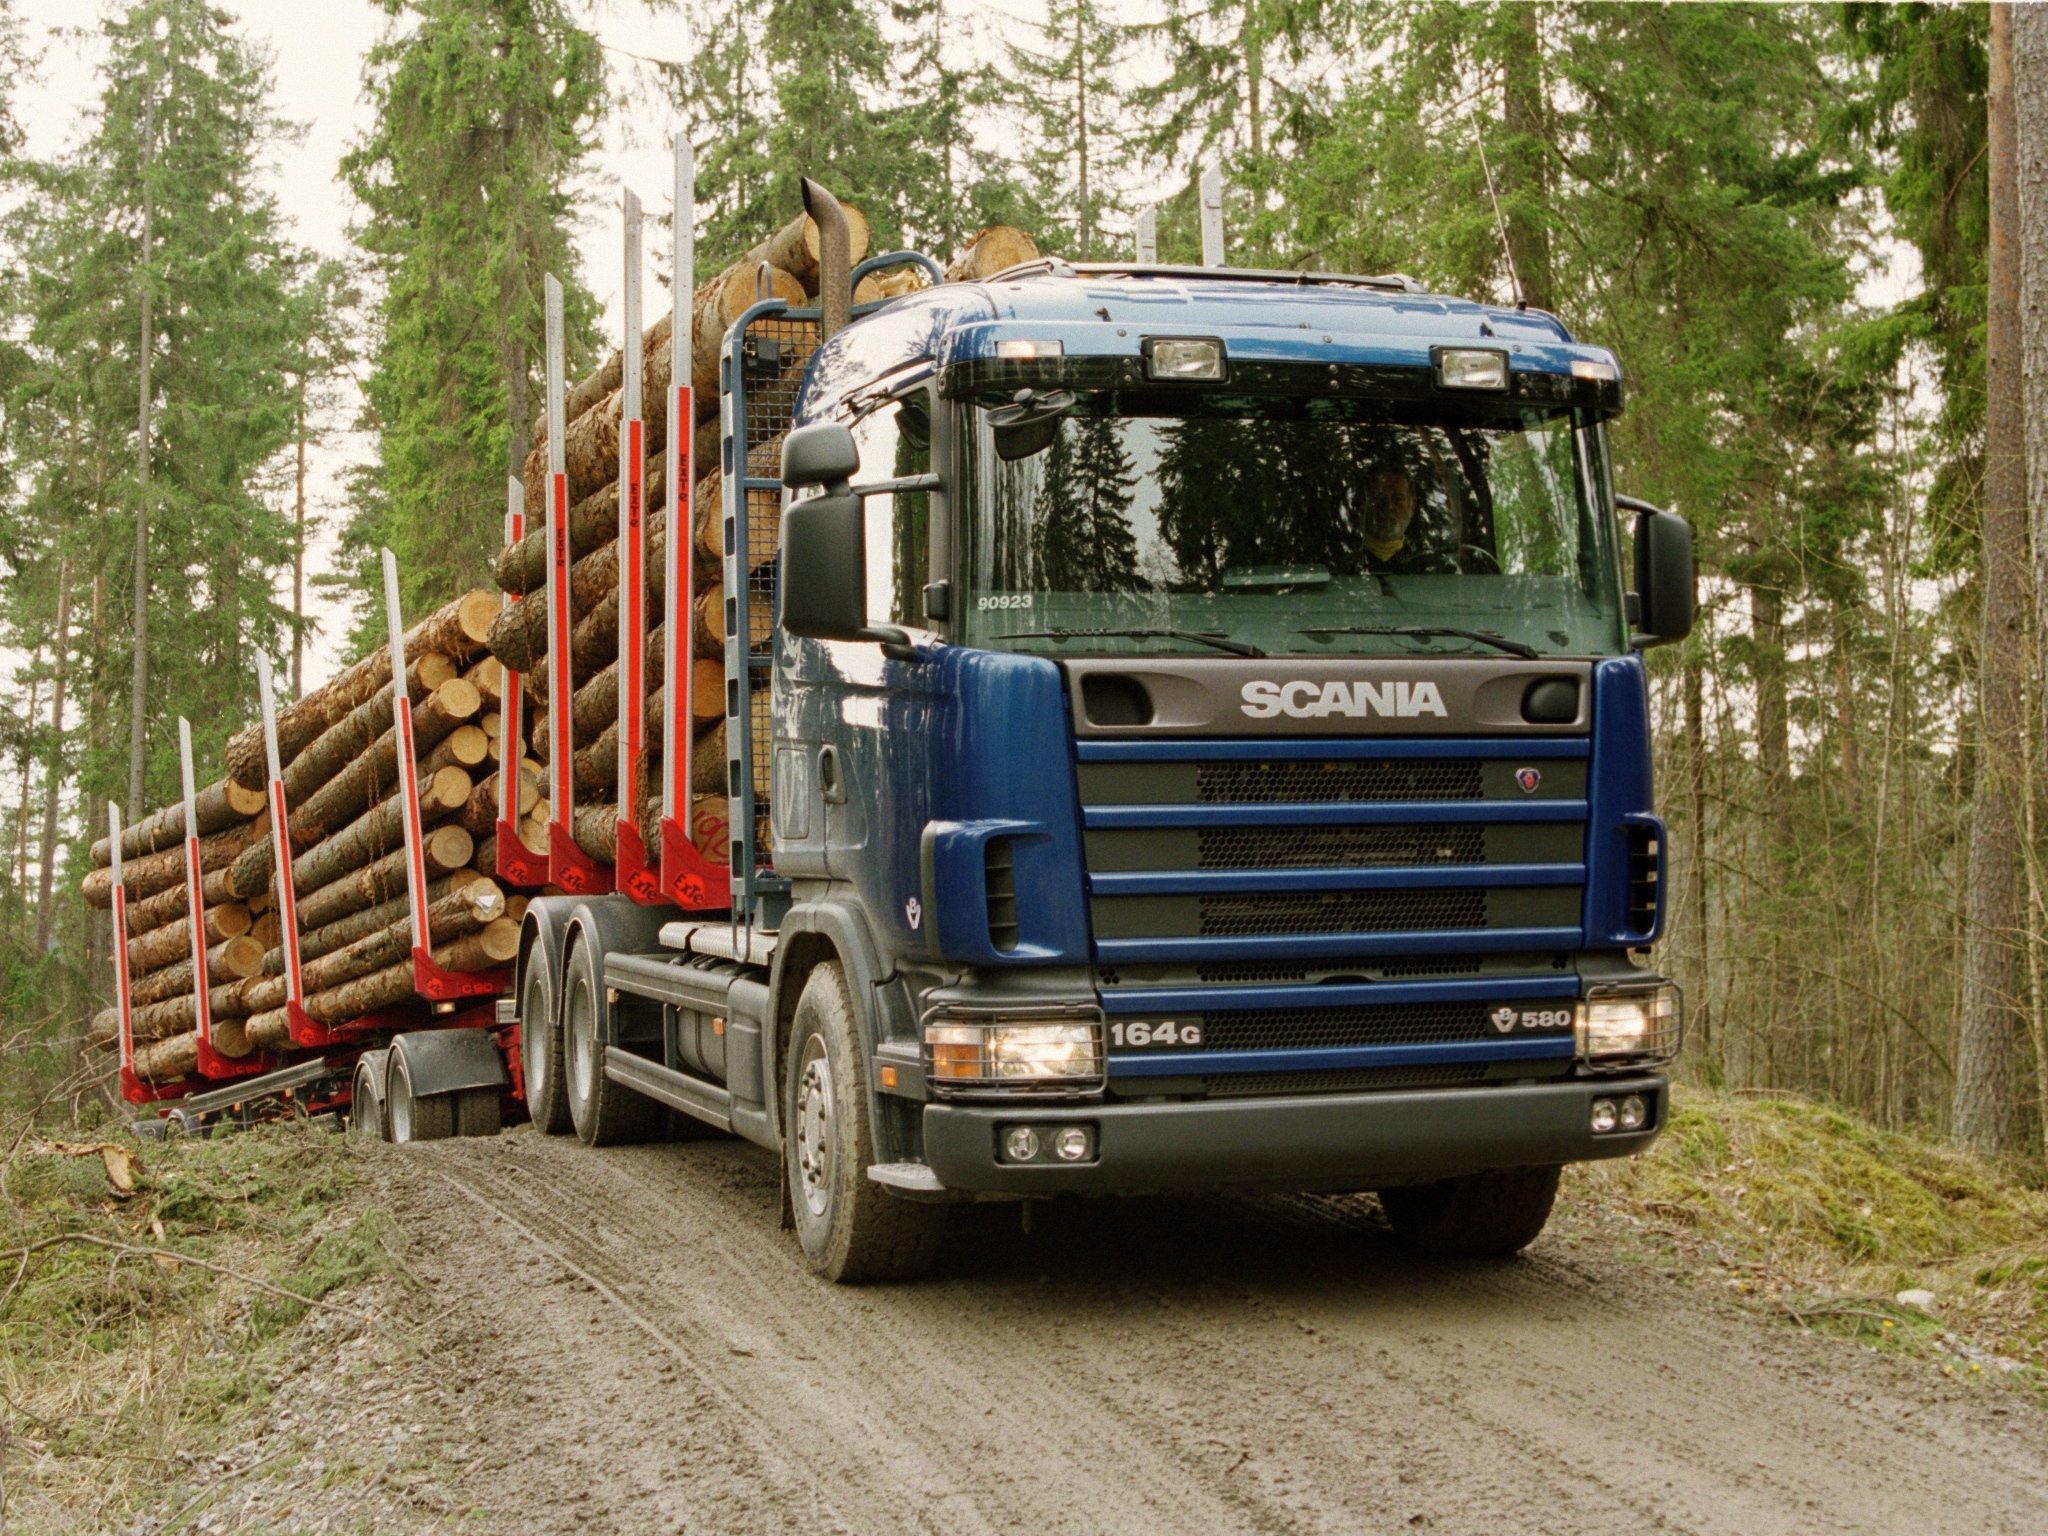 1995 04, Scania, R164gb, 580, 6a Wallpaper